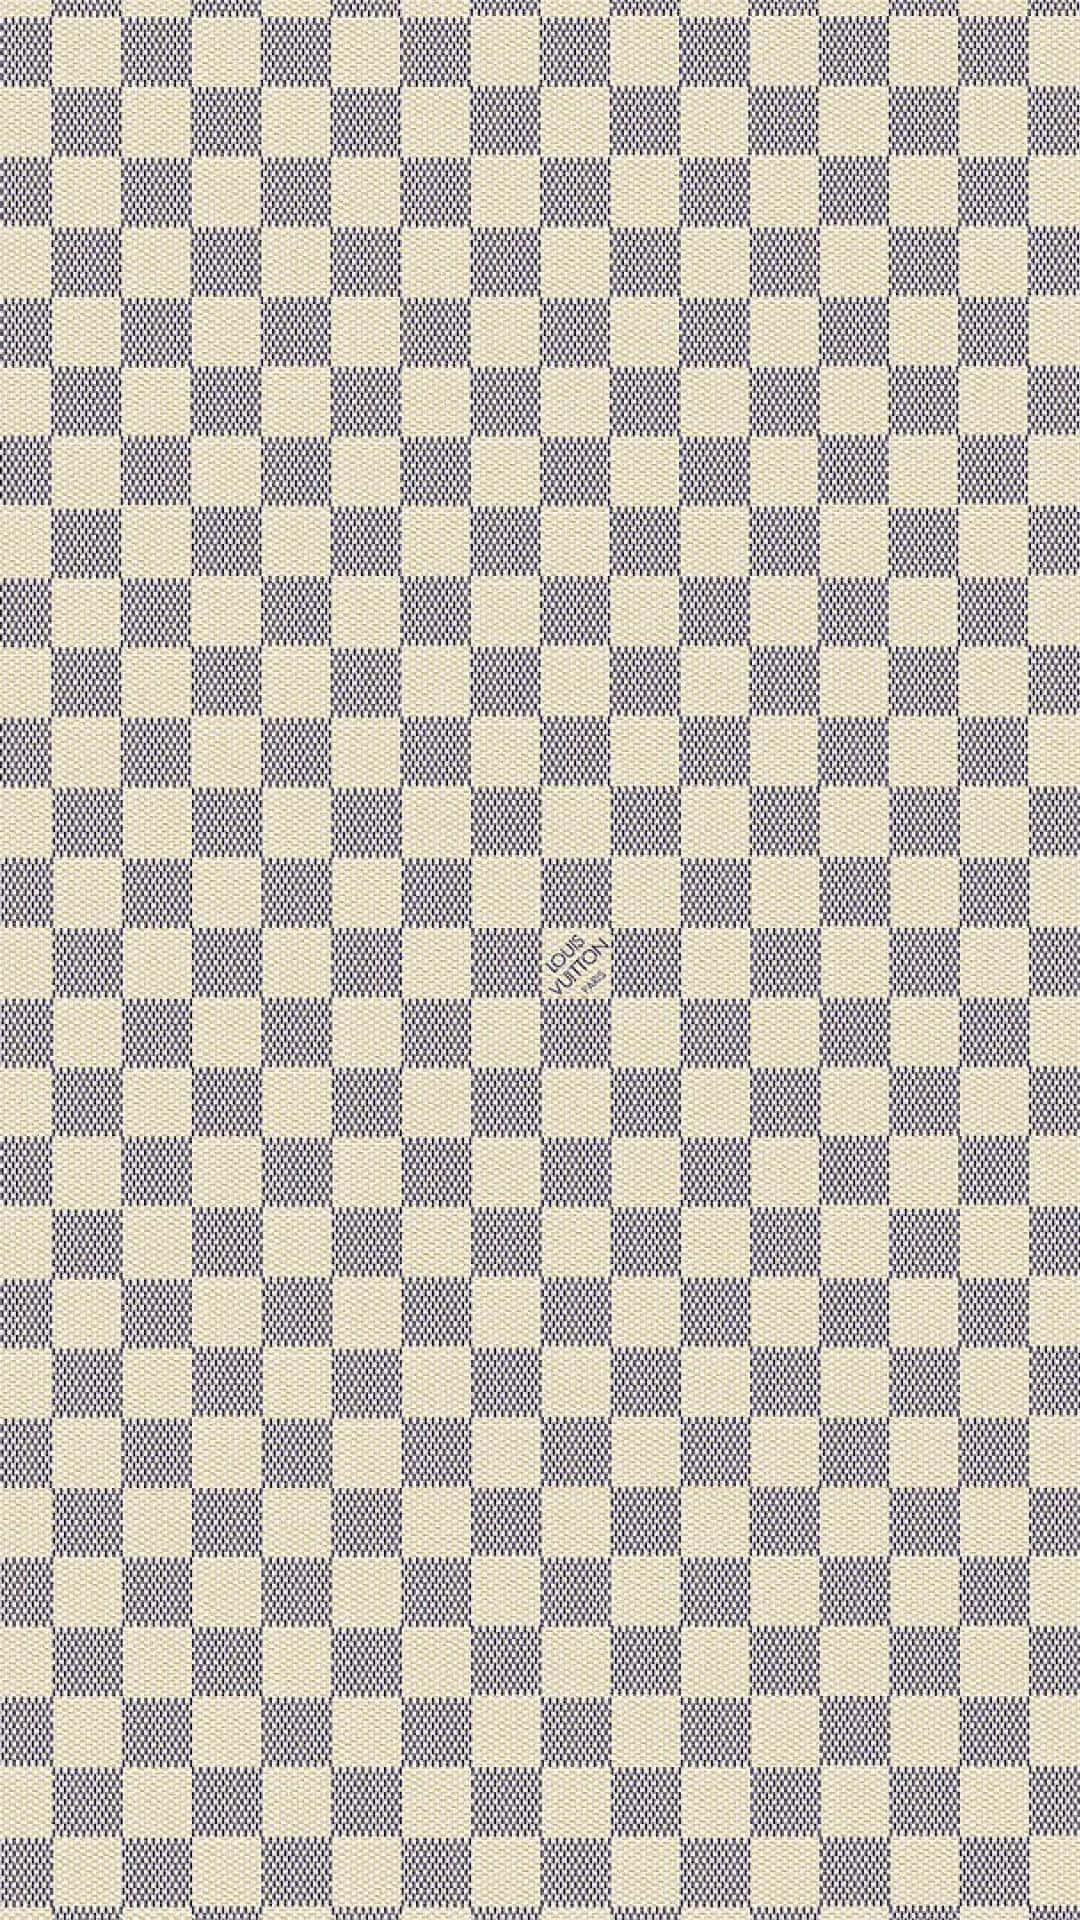 Checkered Designer Art Background